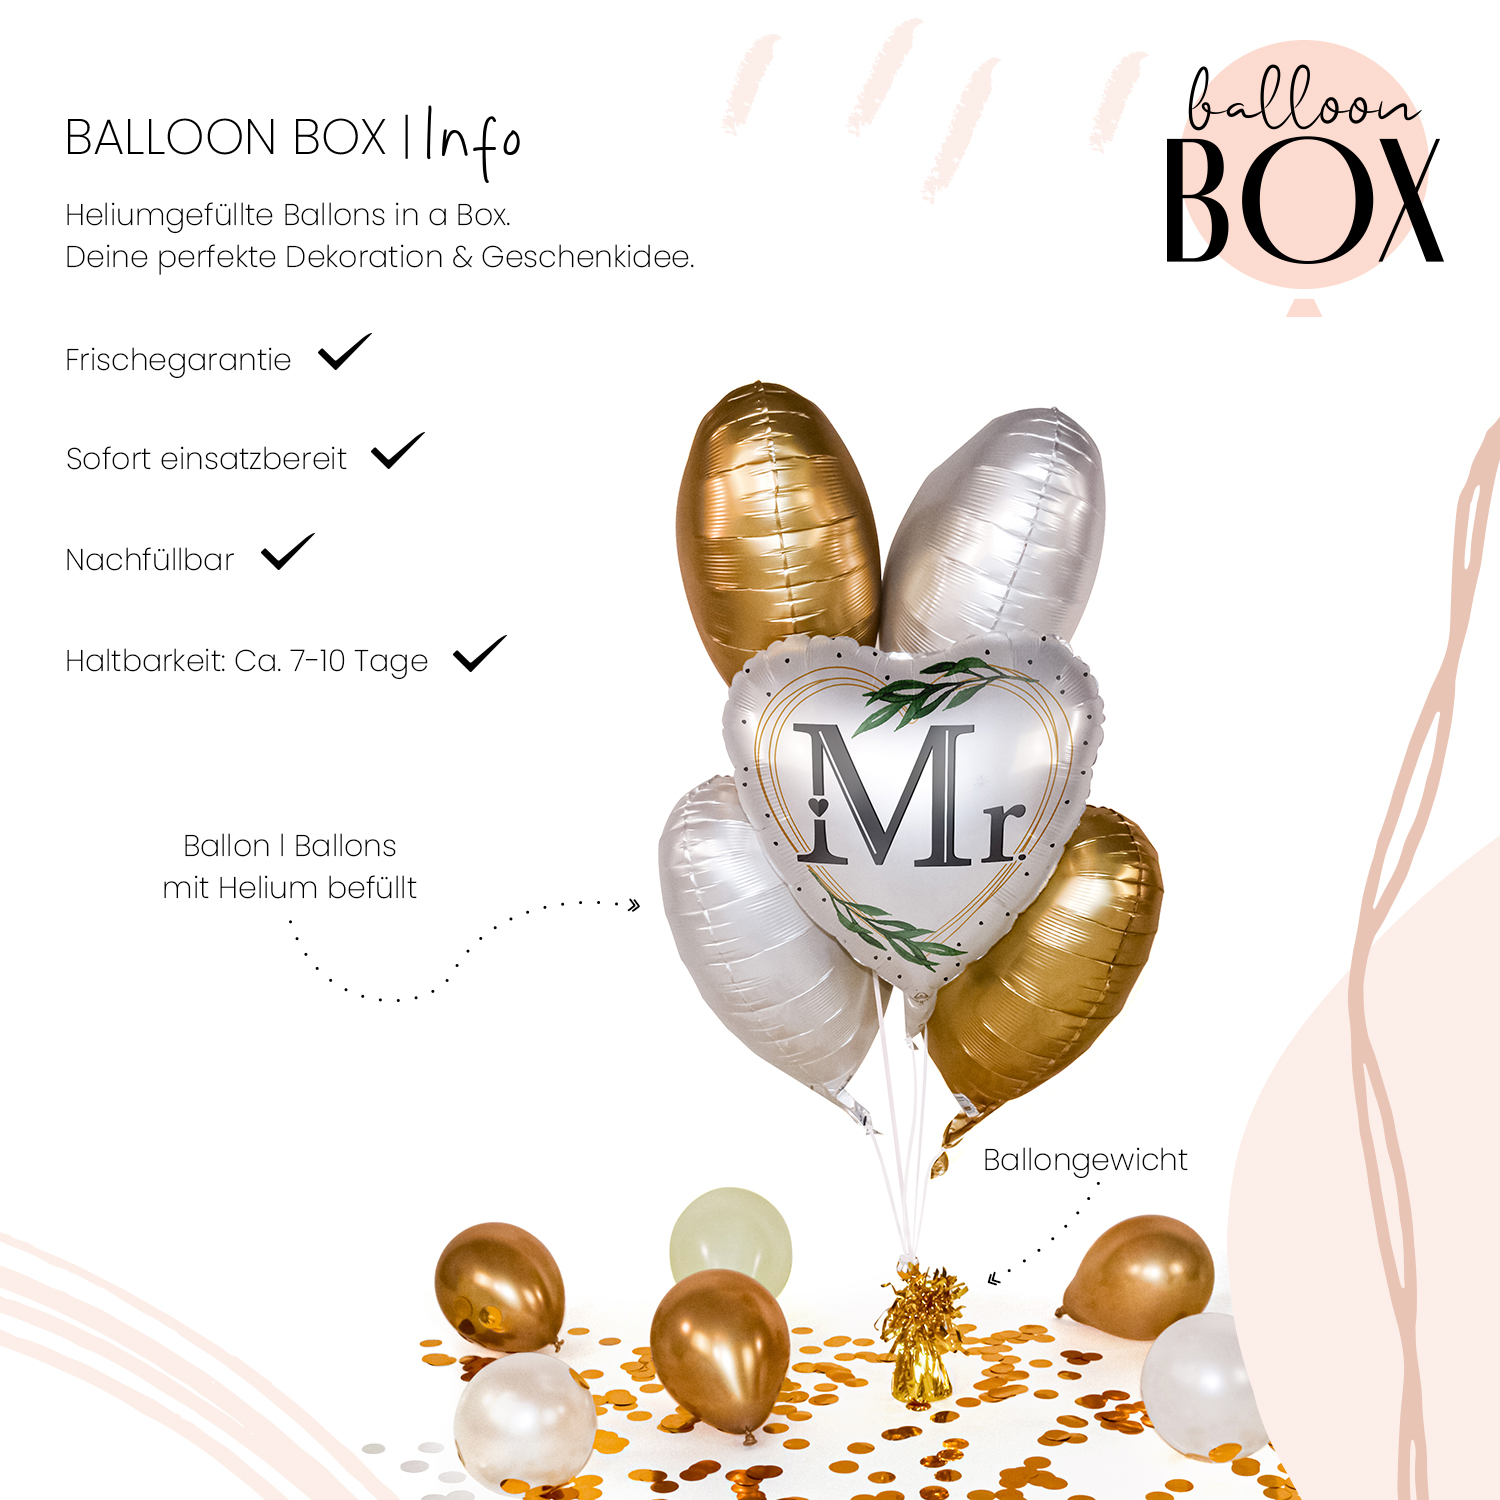 Heliumballon in a Box - Mr.